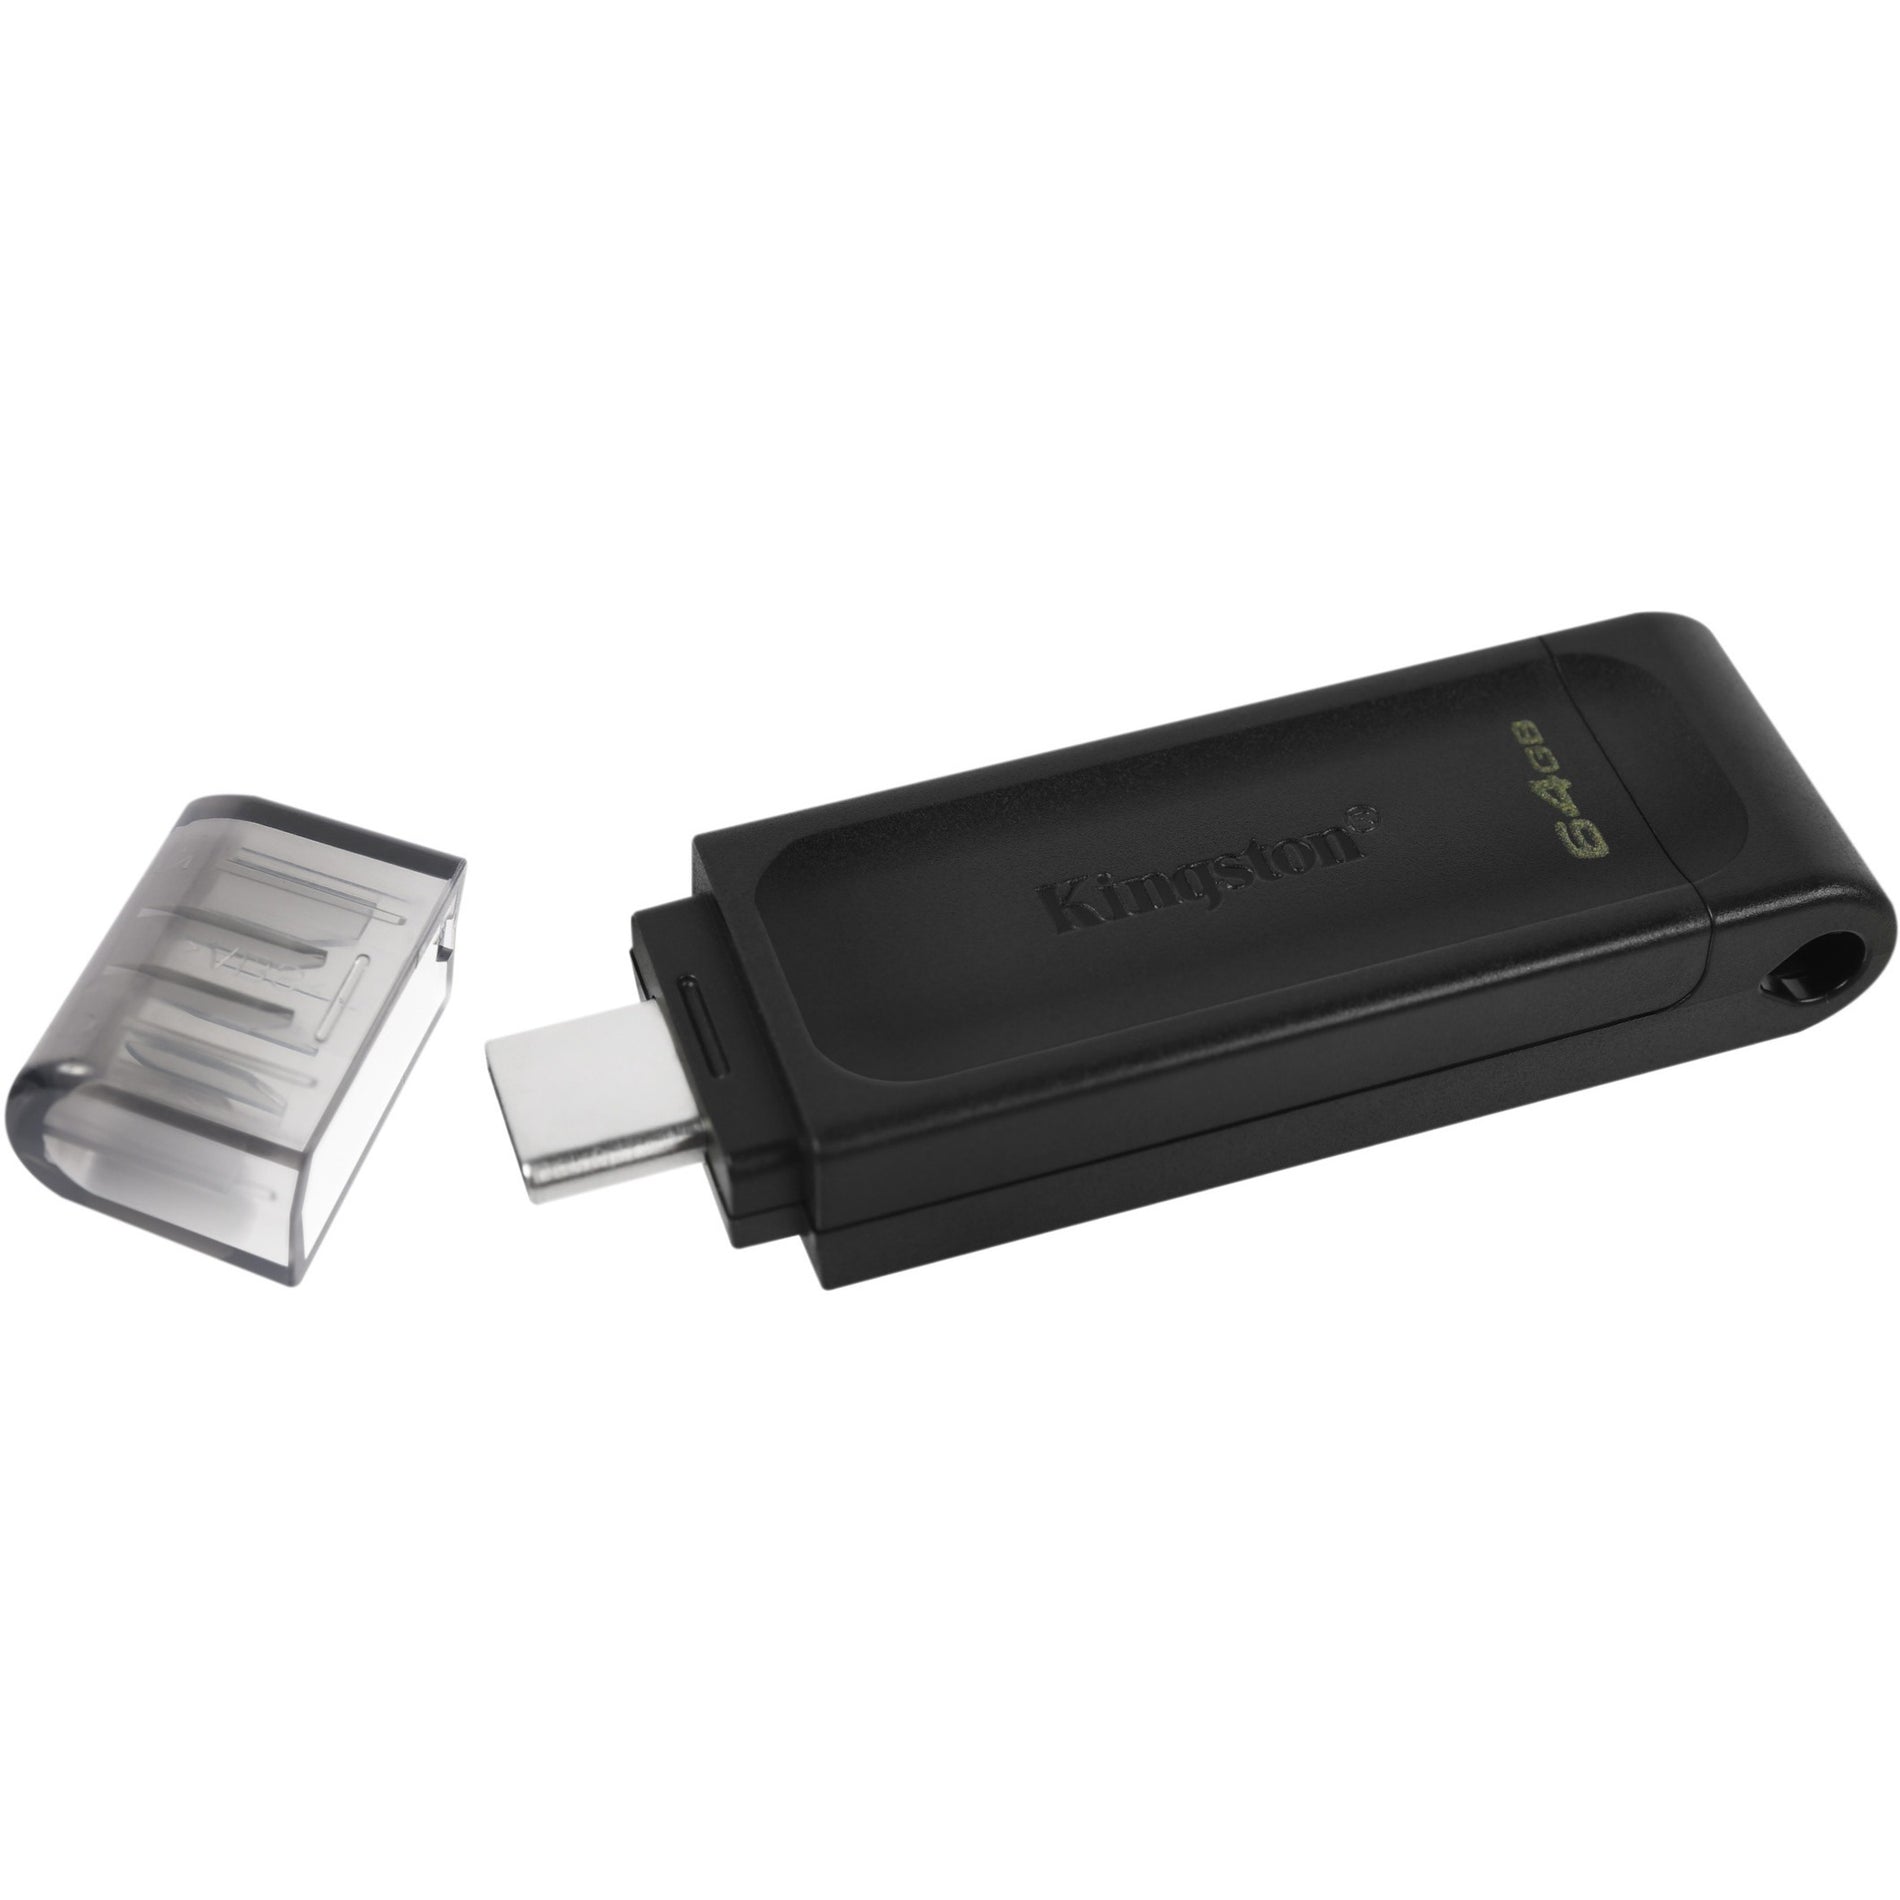 Kingston DT70/64GB DataTraveler 70 USB-C Flash Drive, Lightweight, Portable, 64GB Storage